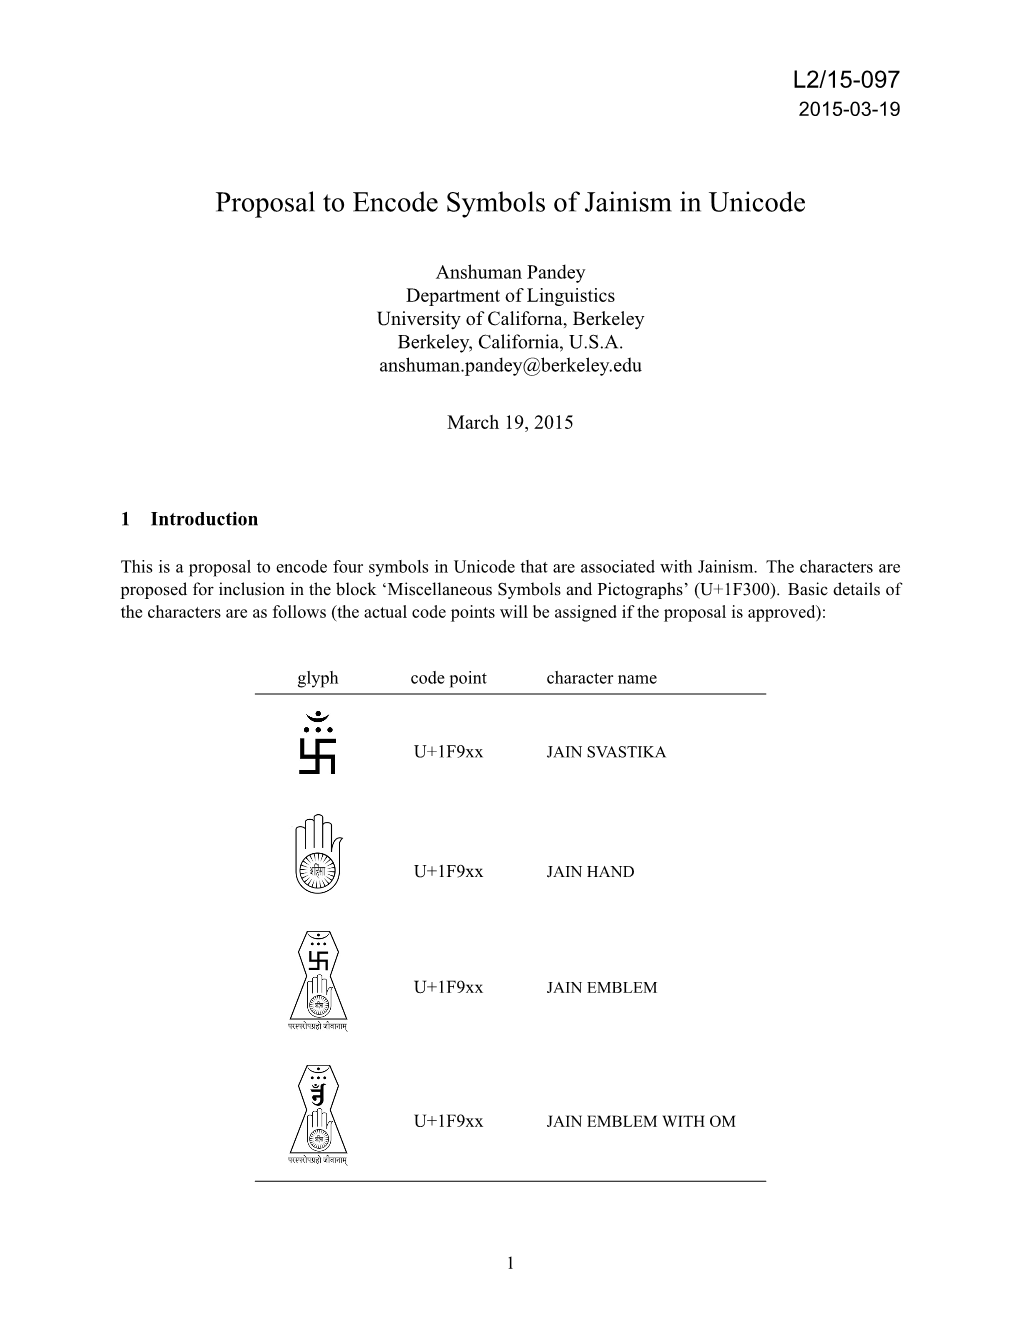 Proposal to Encode Symbols of Jainism in Unicode